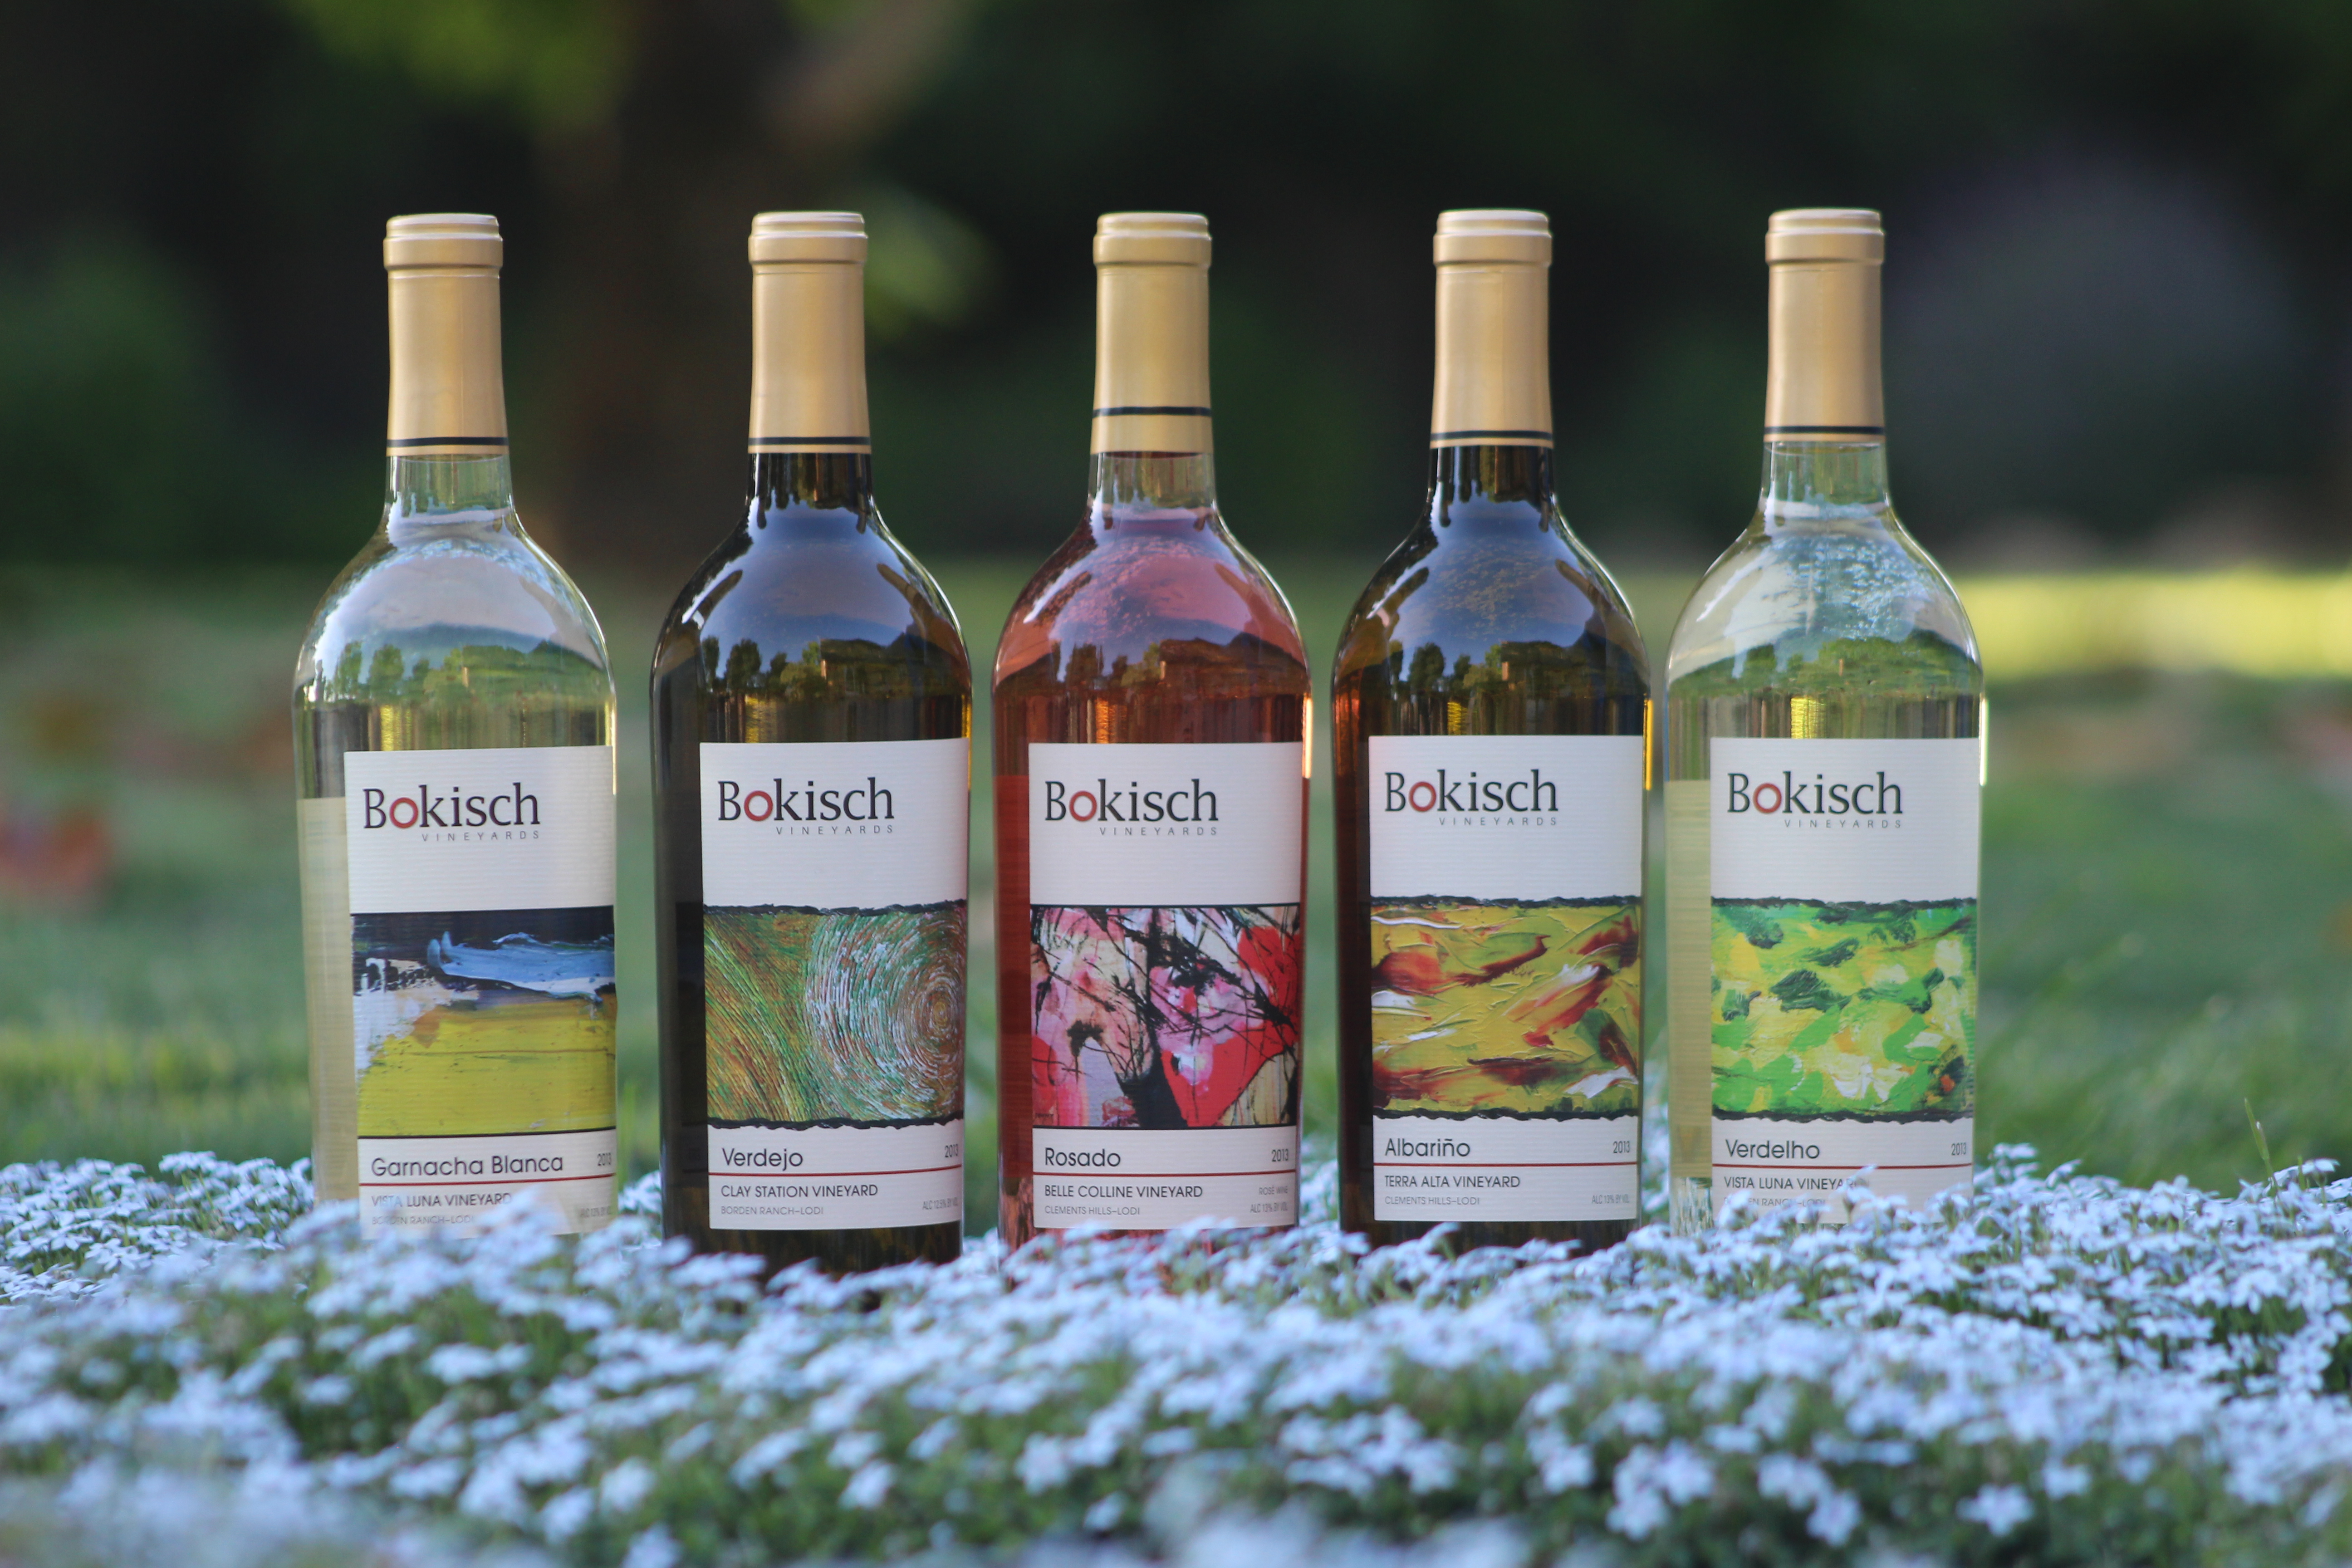 Bokisch Summer Wines